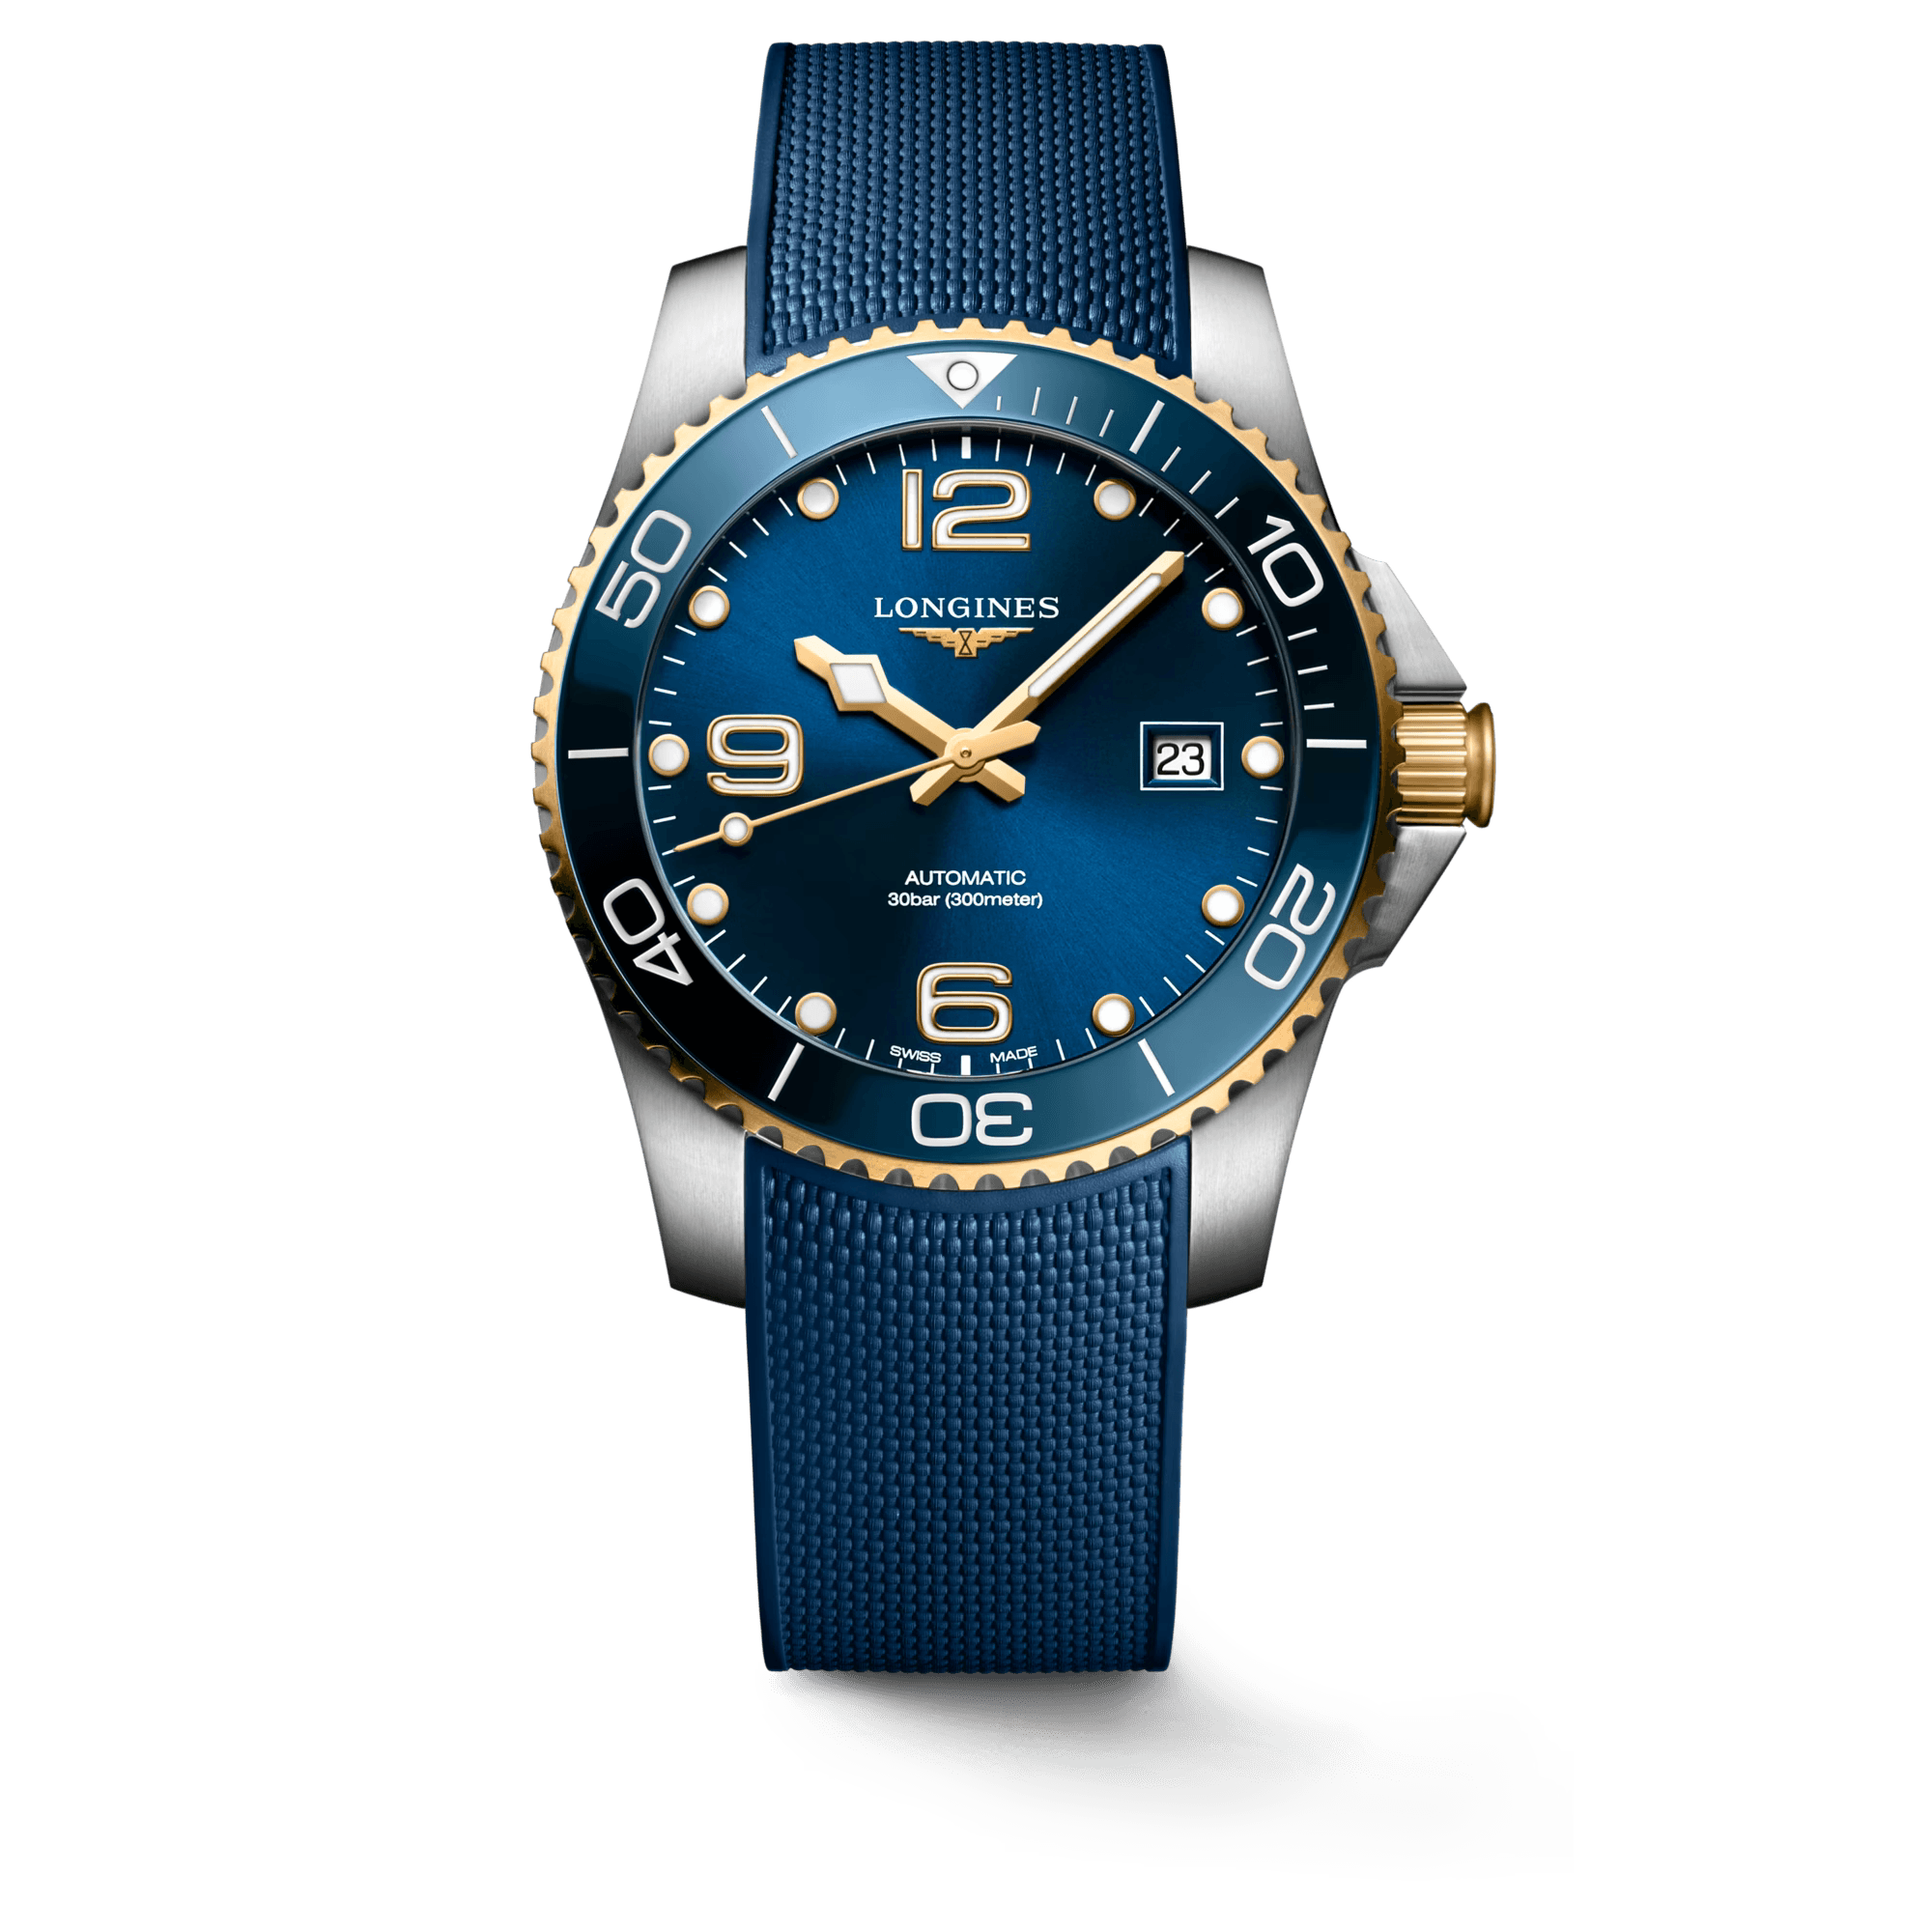 Longines Hydroconquest Automatic Men's Watch L37813969